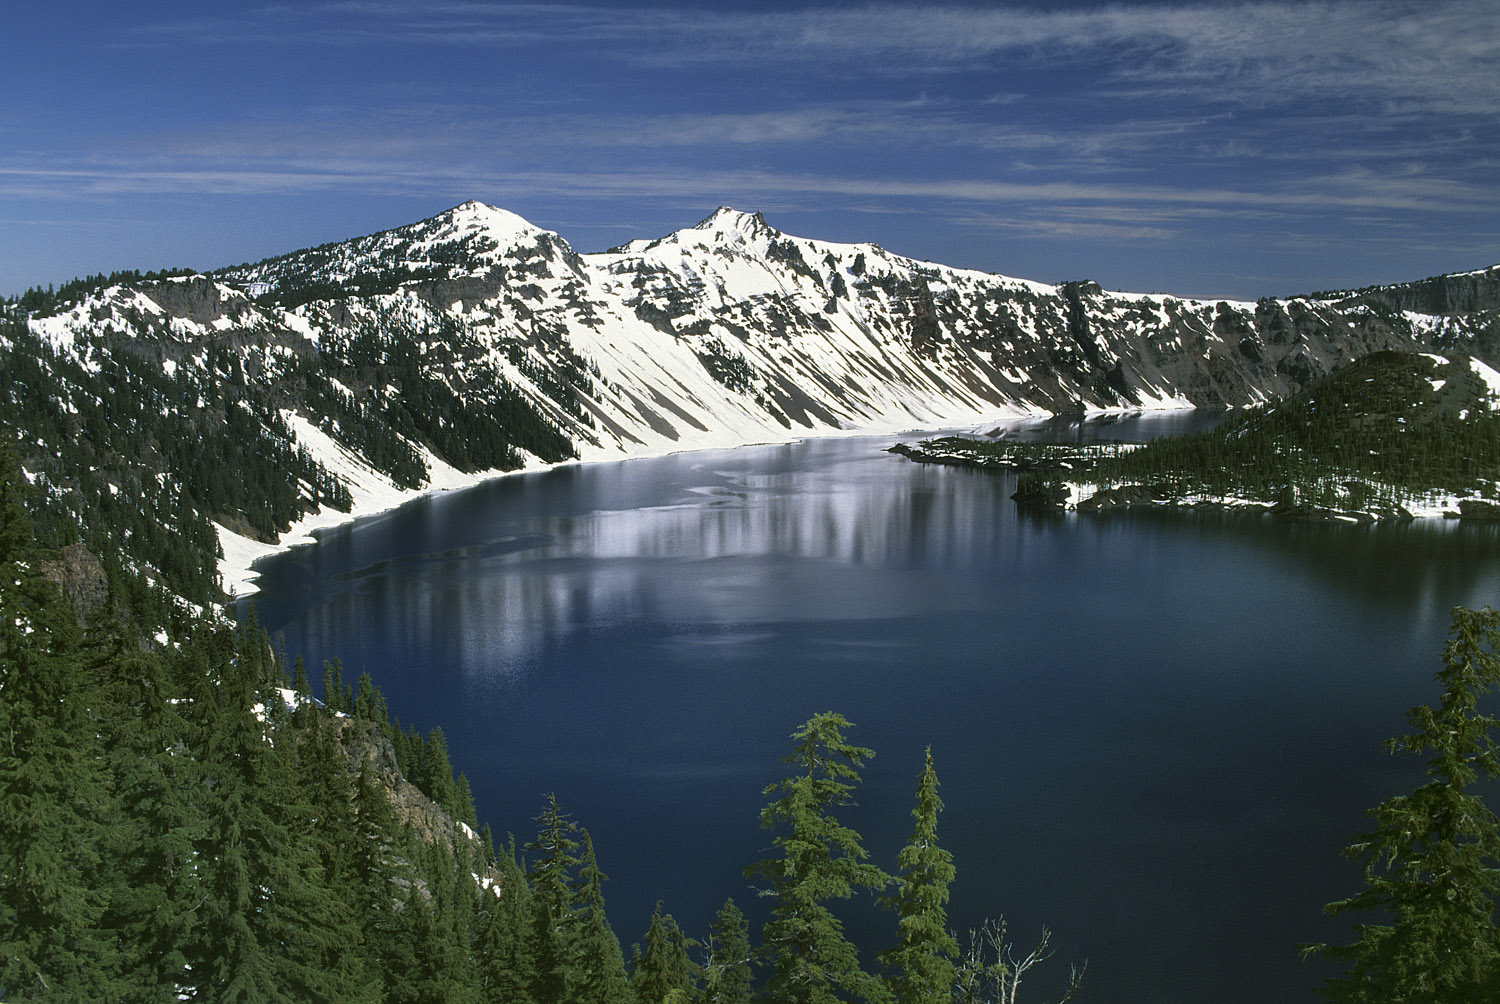 Crater lake, Oregon, USA